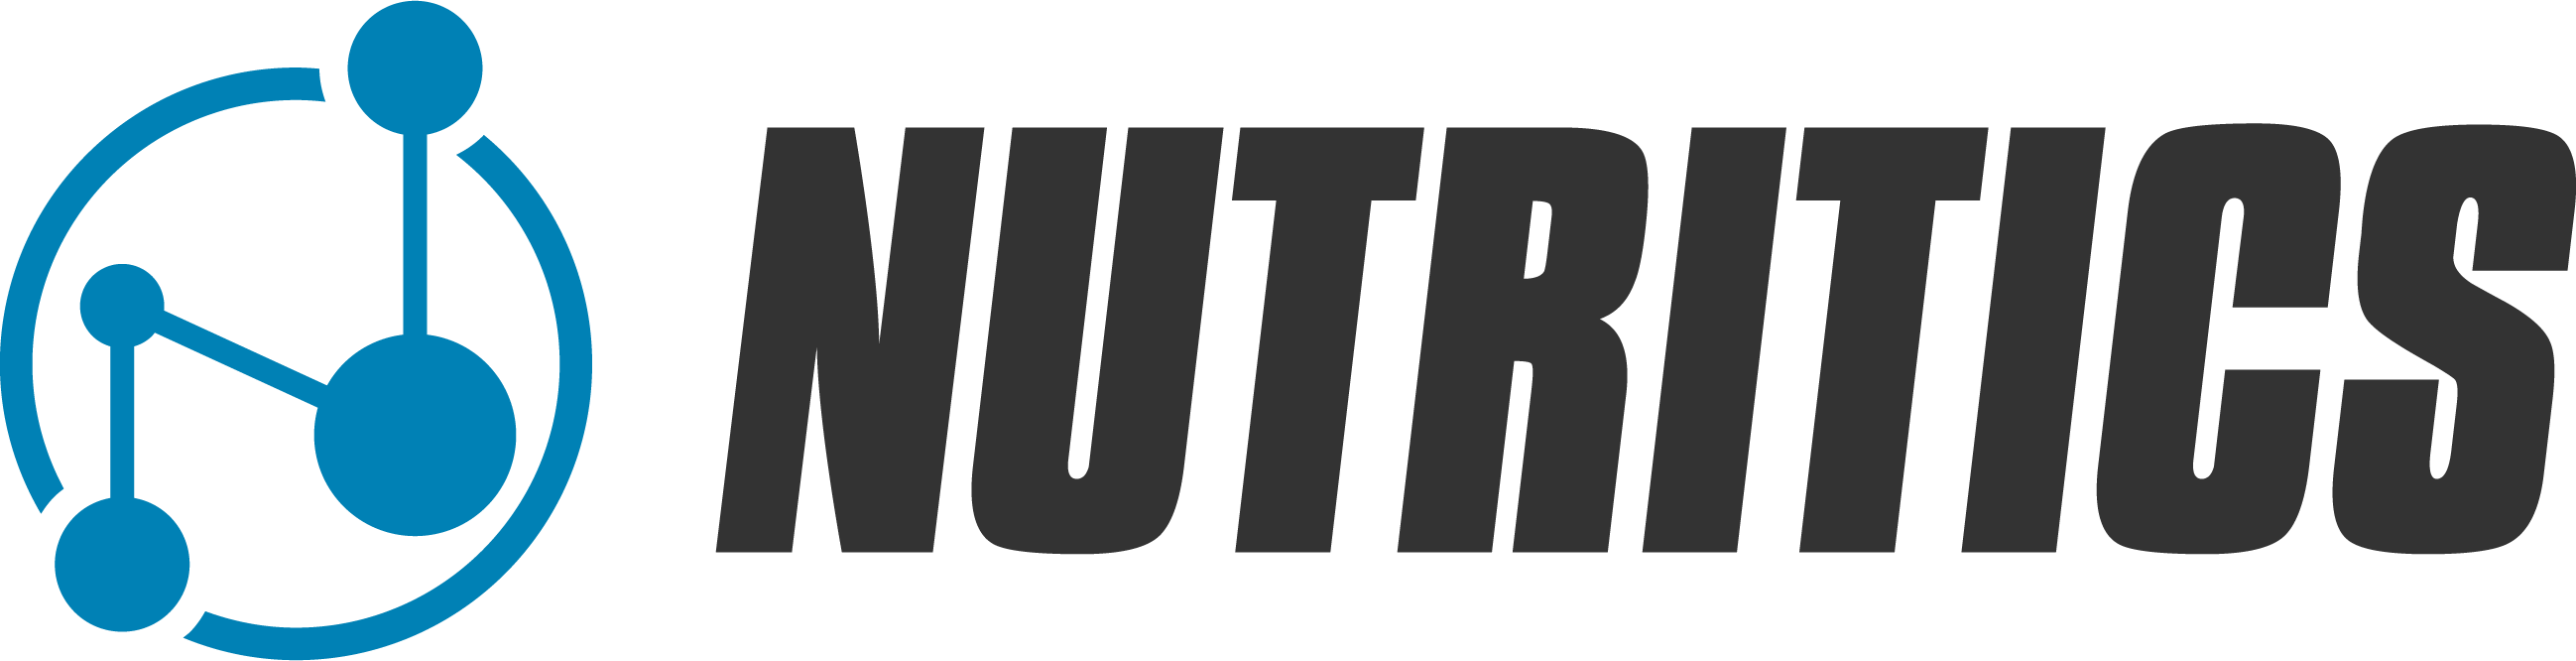 Nutritics logo